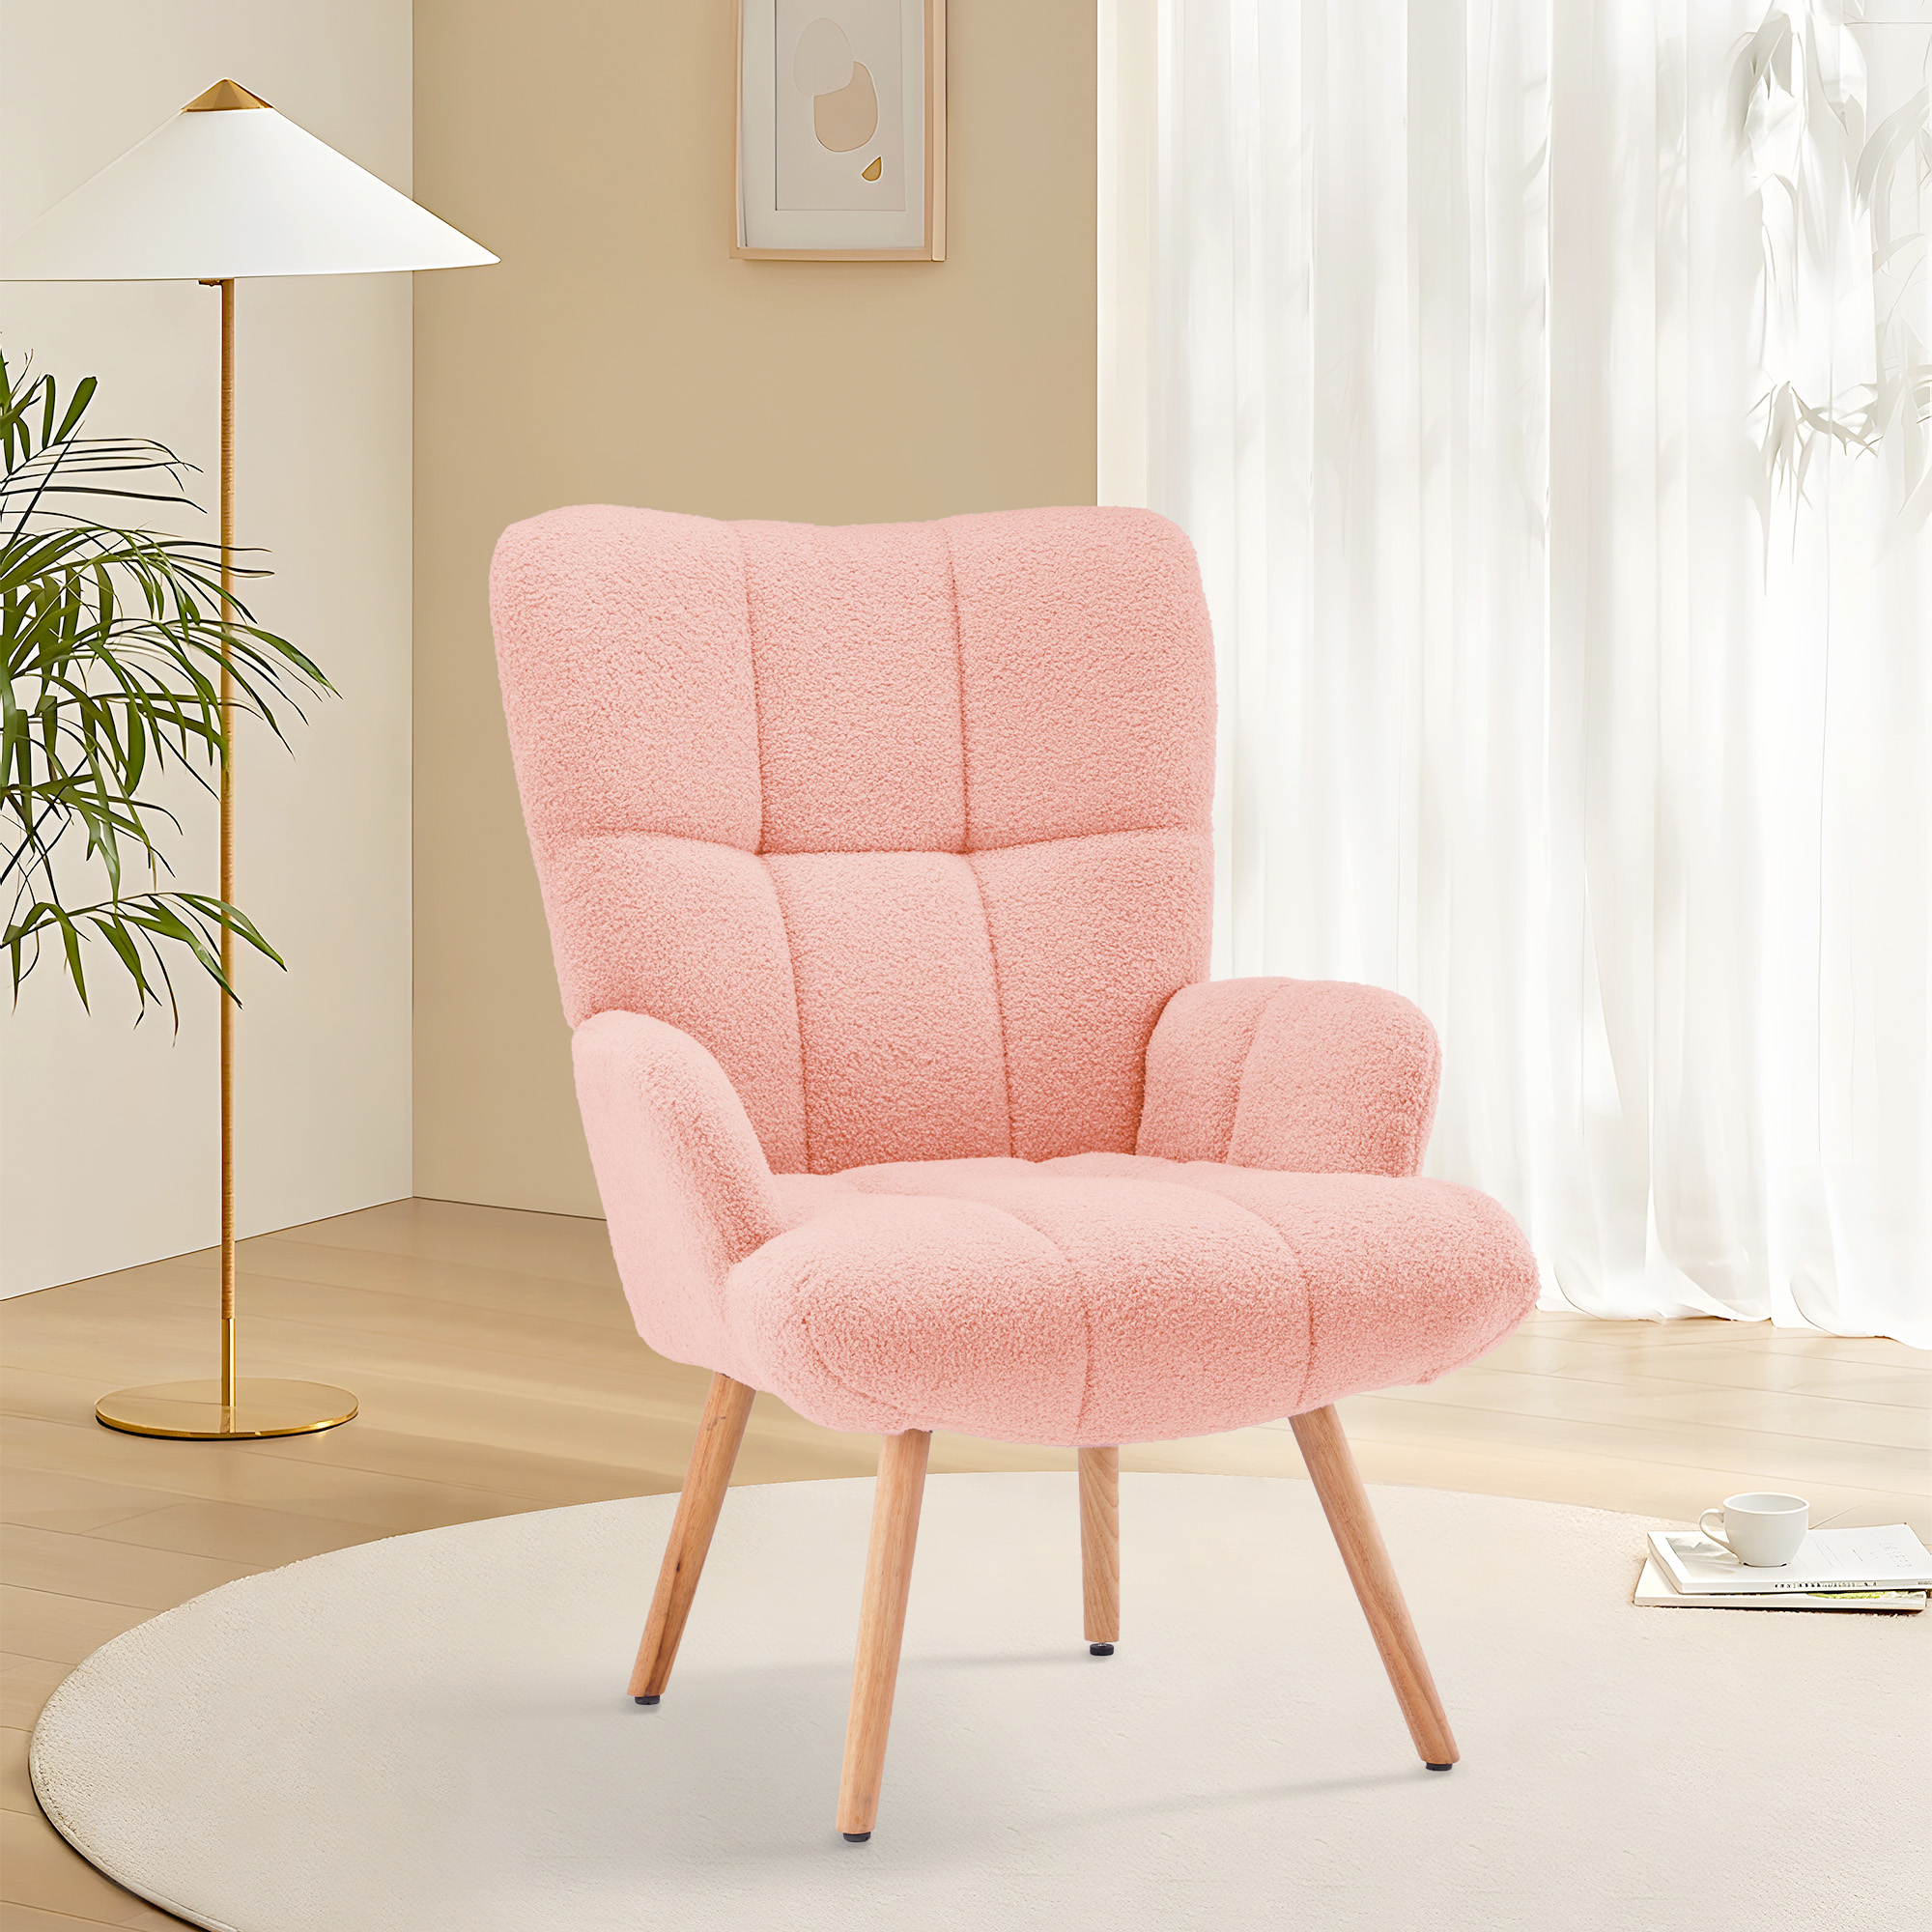 Mordern Accent Chair, Upholstered High Back Comfy Living Room Chair, Wingback Armchair, Basic Teddy Velvet Chair - White